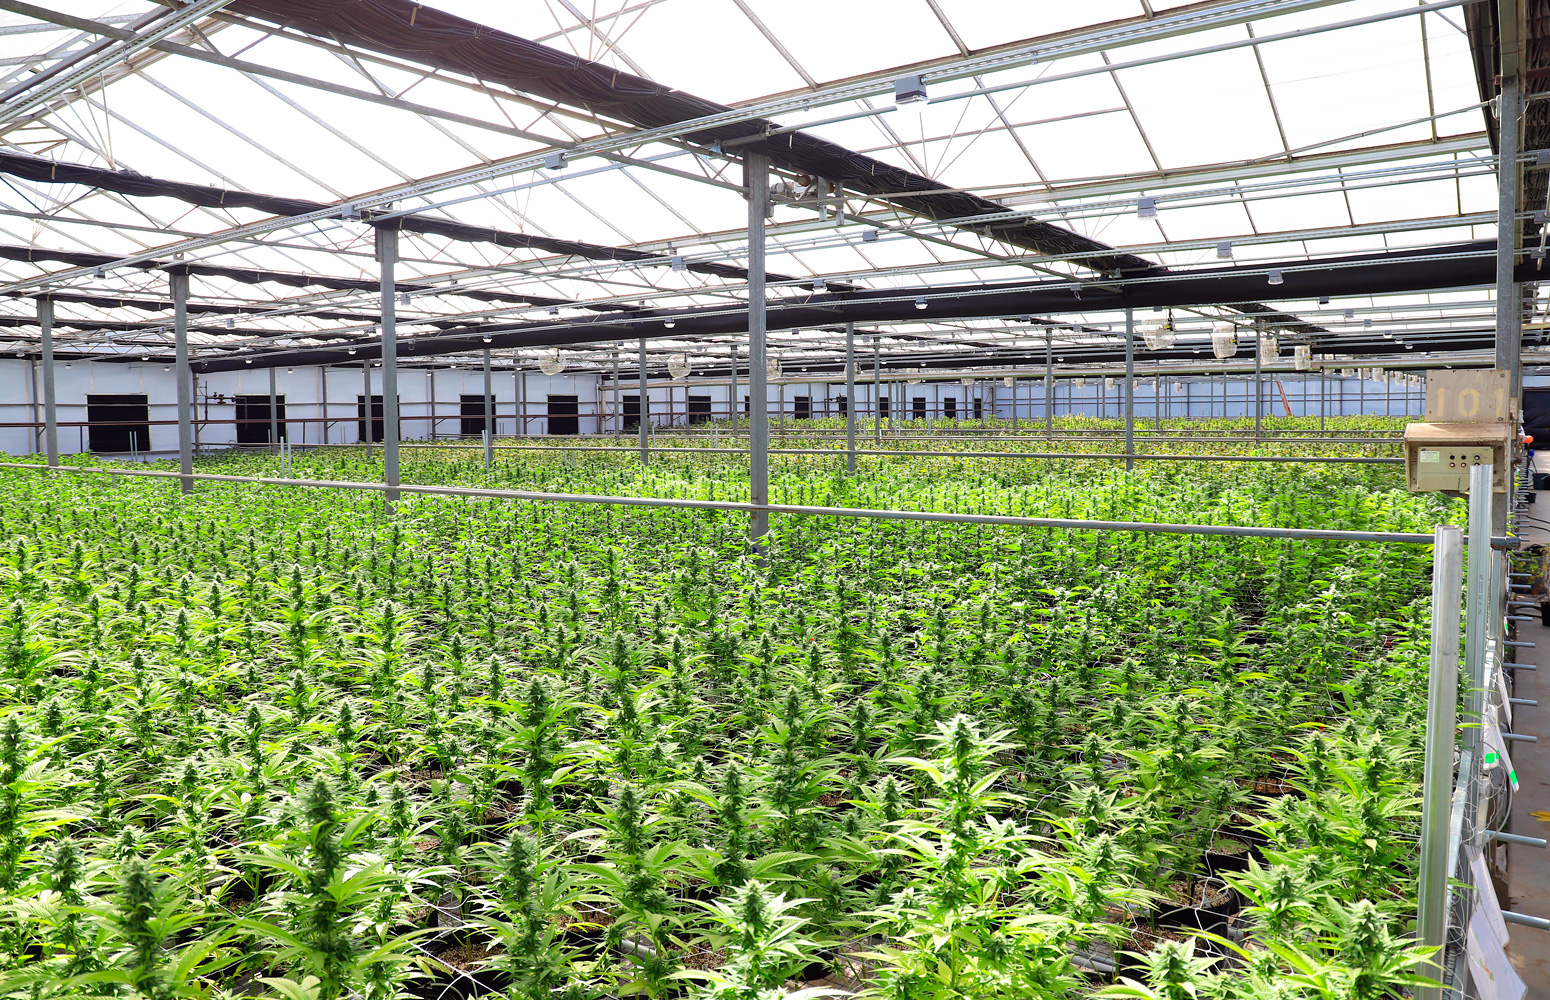 A medical cannabis production